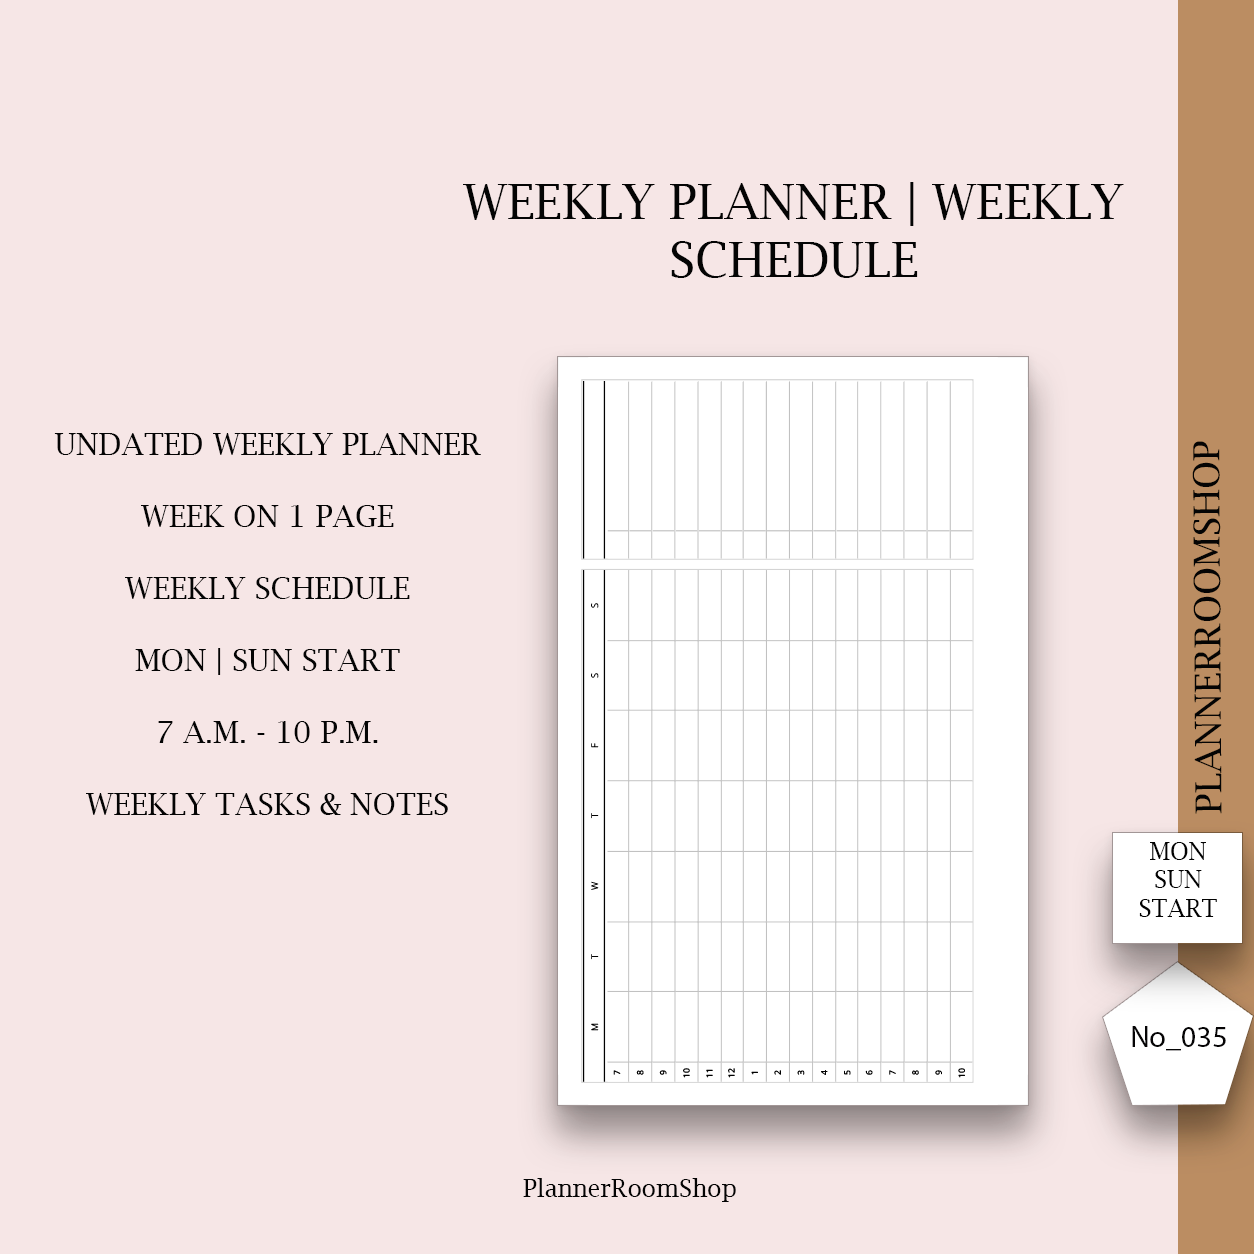 Weekly planner | printable inserts - 035